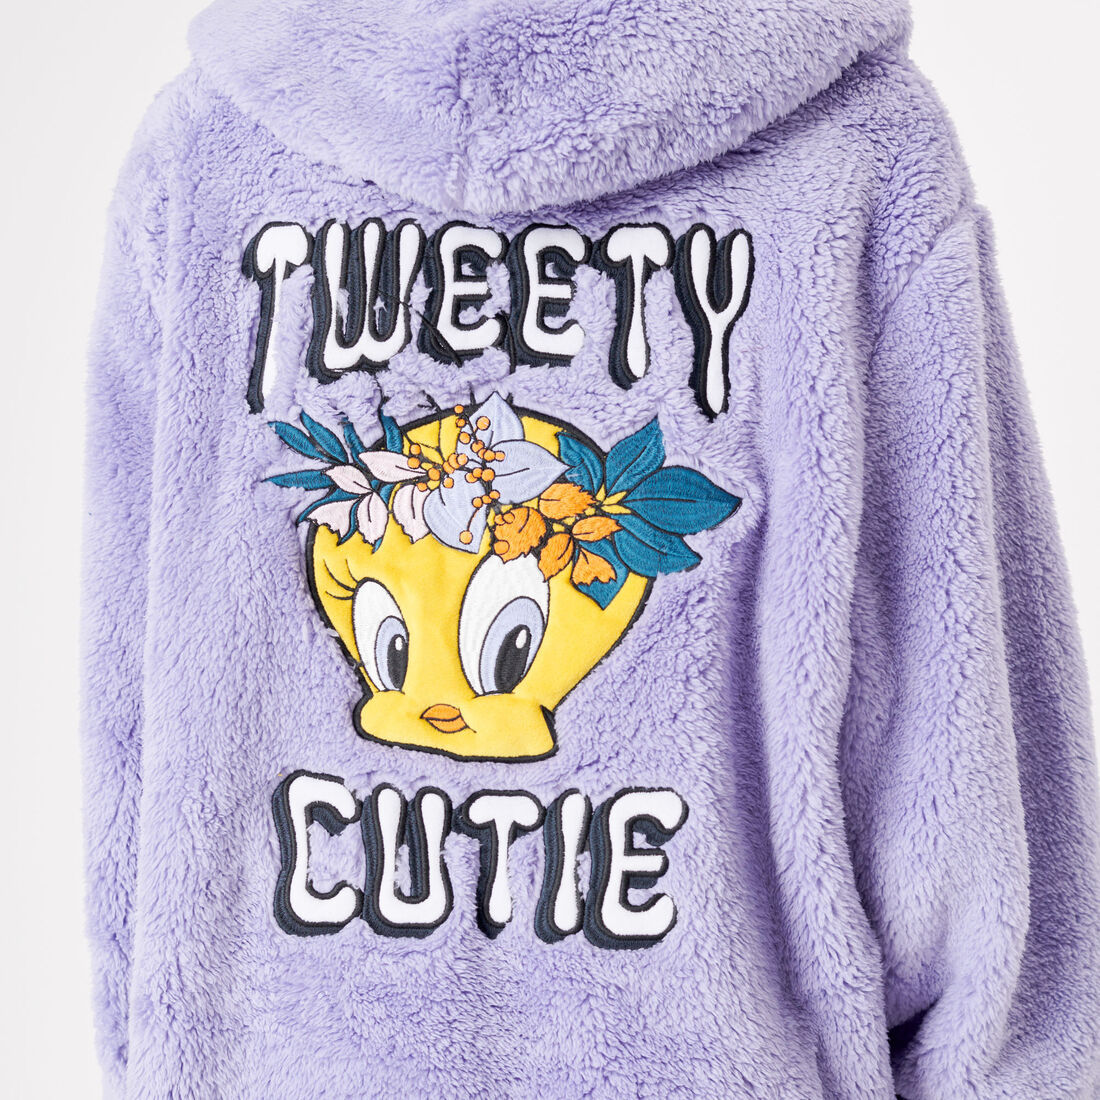 Tweety Pie print bathrobe;